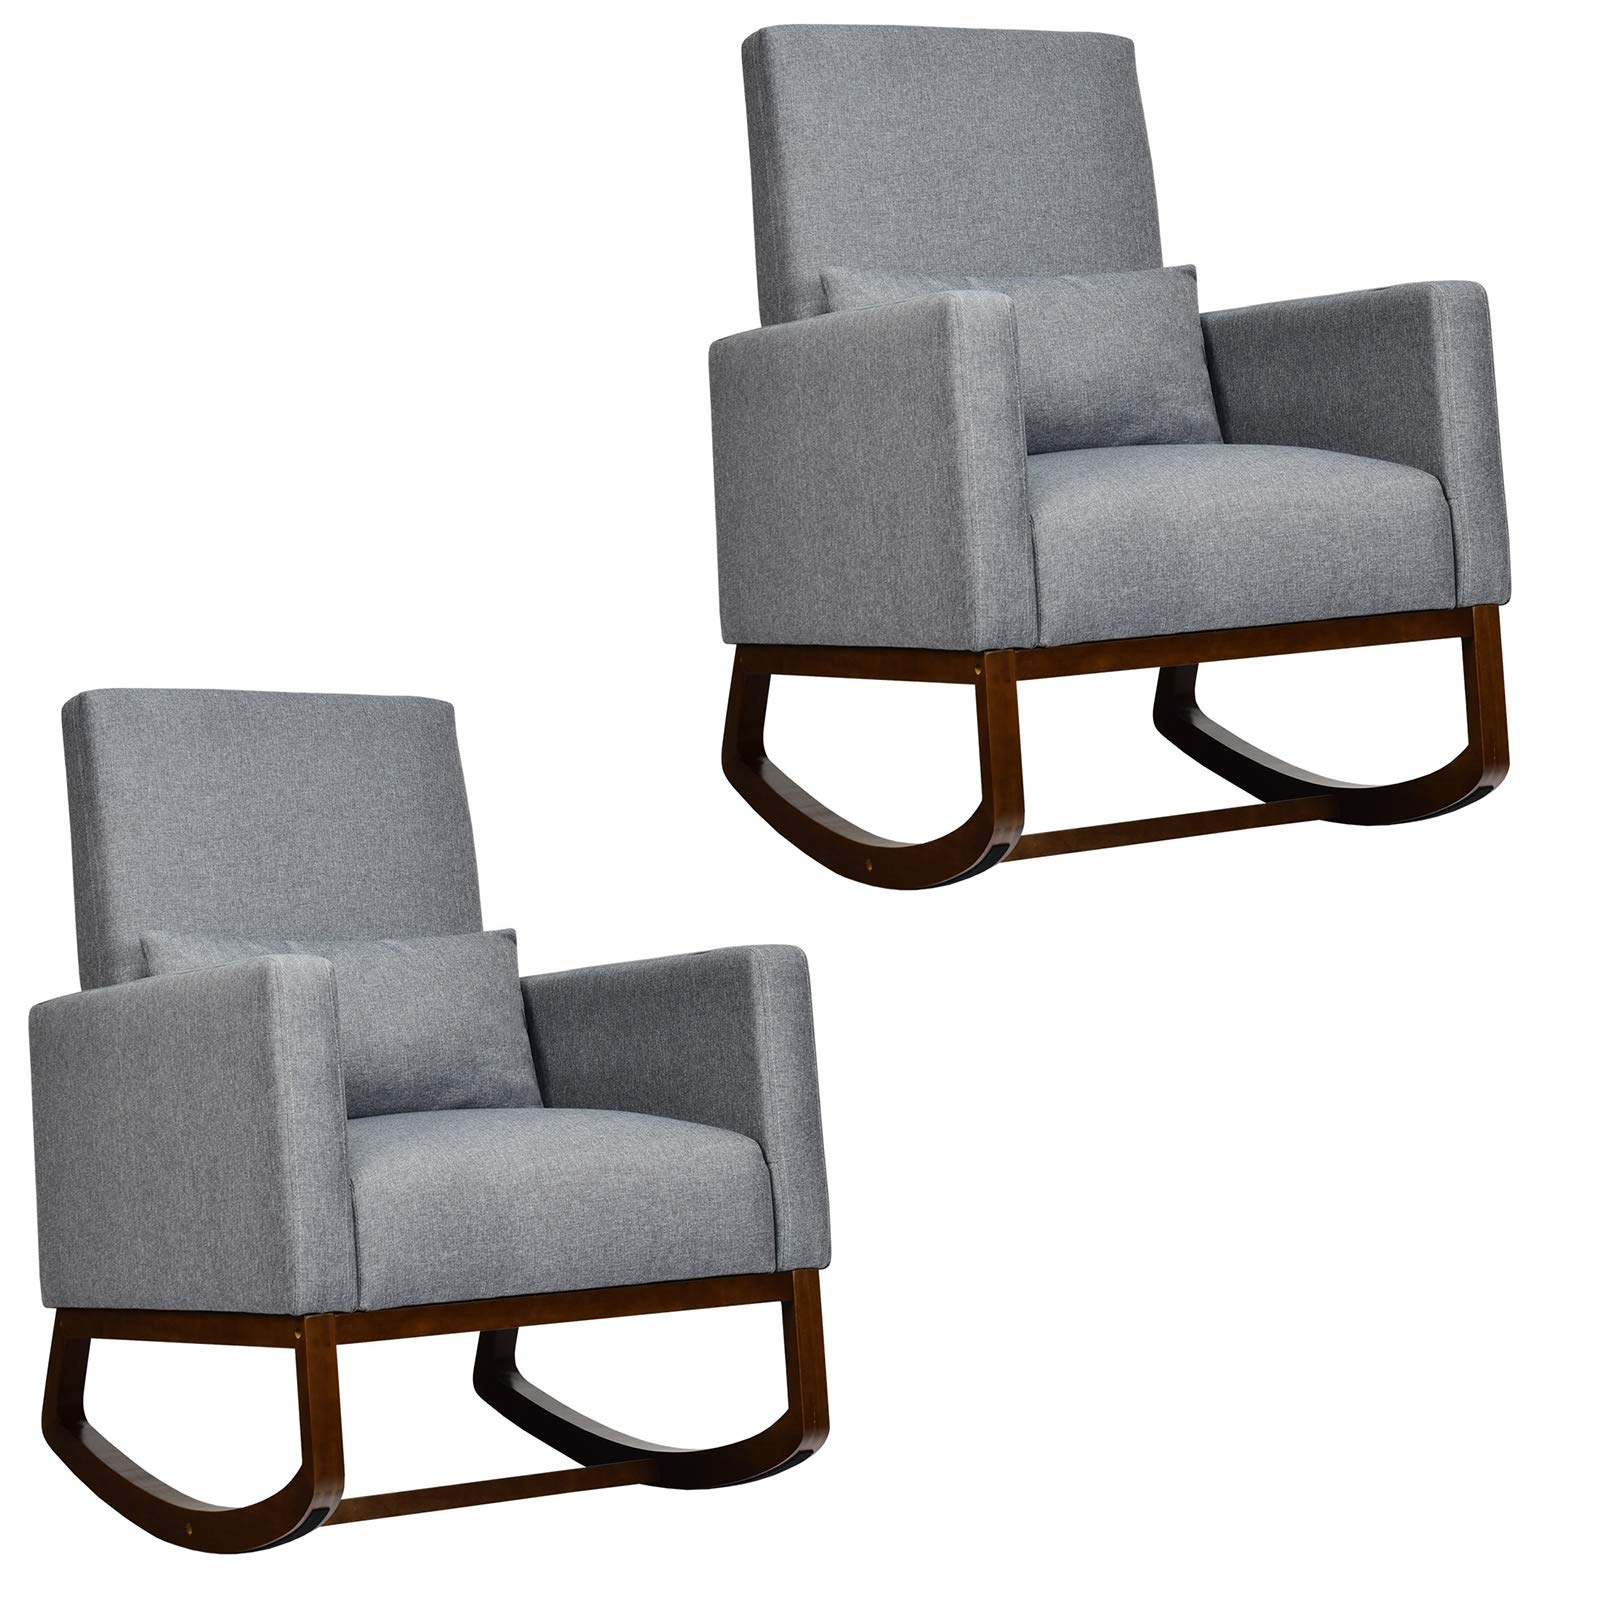 Giantex Upholstered Rocking Chair, Modern High Back Armchair